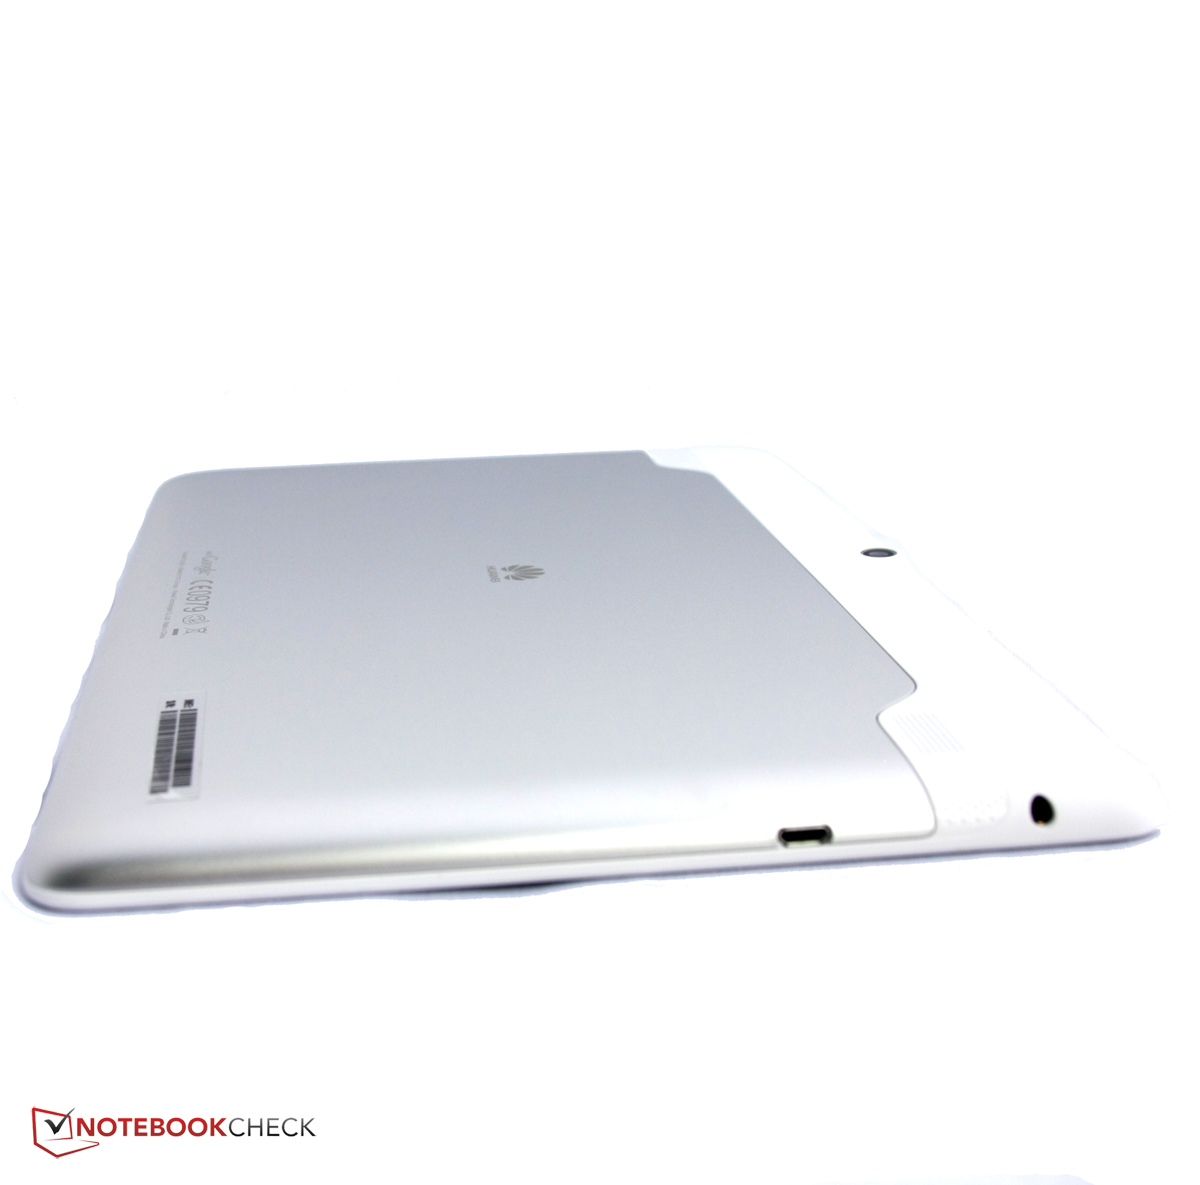 Belastingbetaler hypotheek veelbelovend Review Huawei MediaPad 10 Link Tablet - NotebookCheck.net Reviews